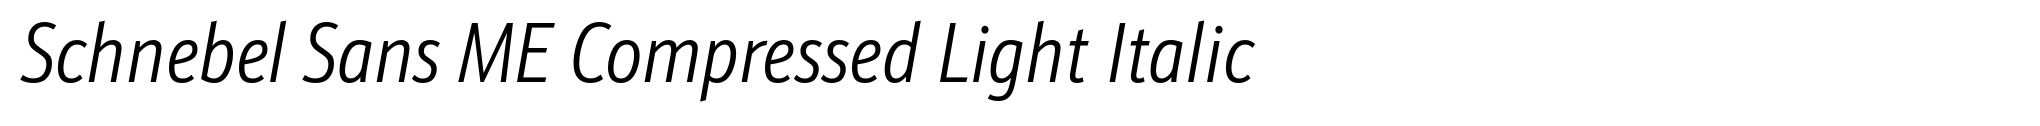 Schnebel Sans ME Compressed Light Italic image